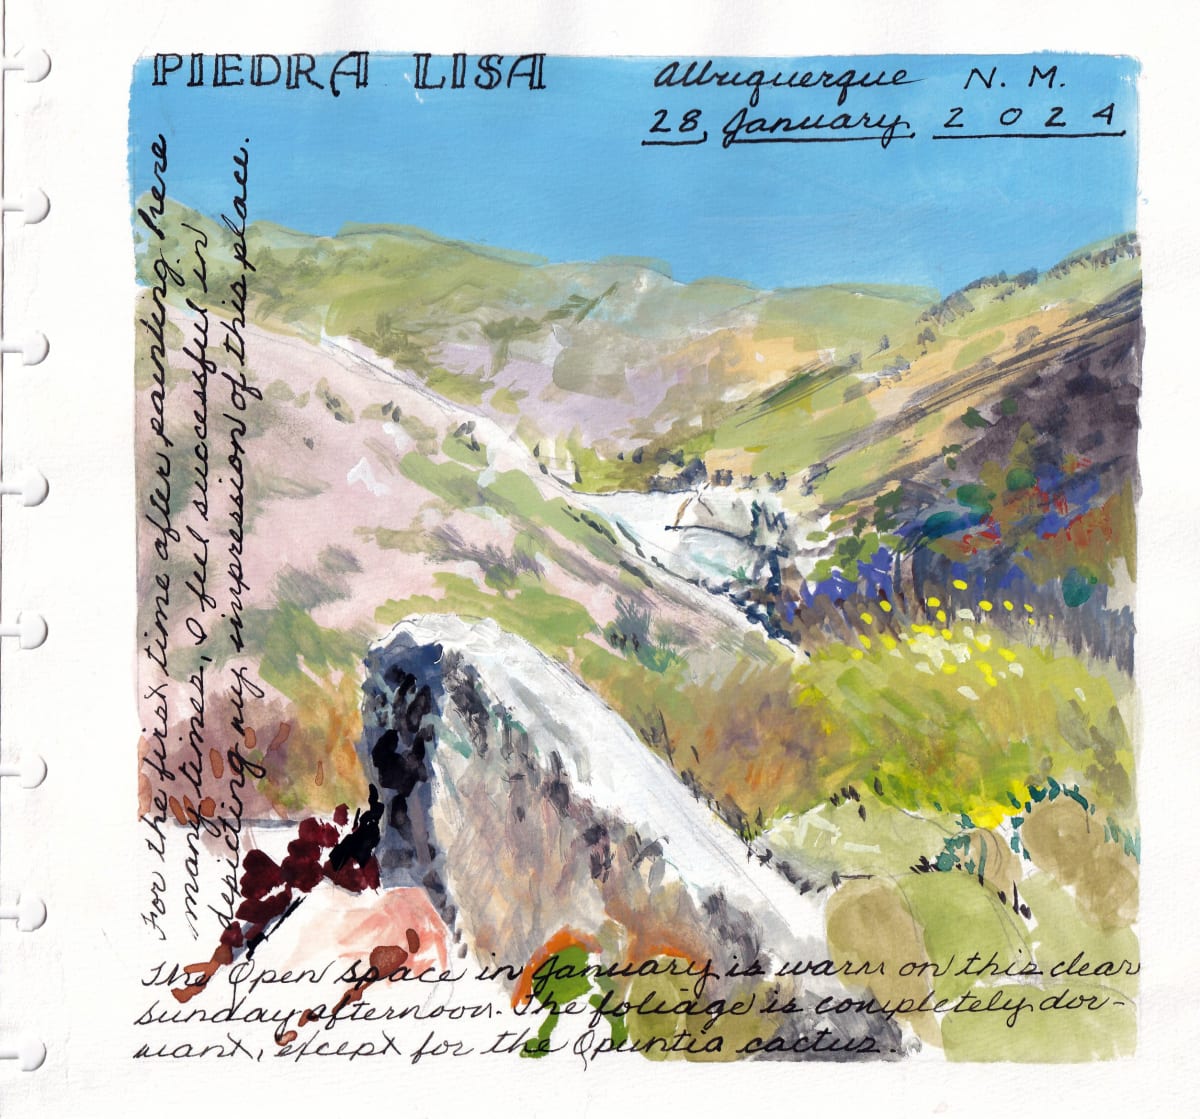 Journey Daybook Page by Margaret Pulis Herrick (Peggy)  Image: Piedra Lisa